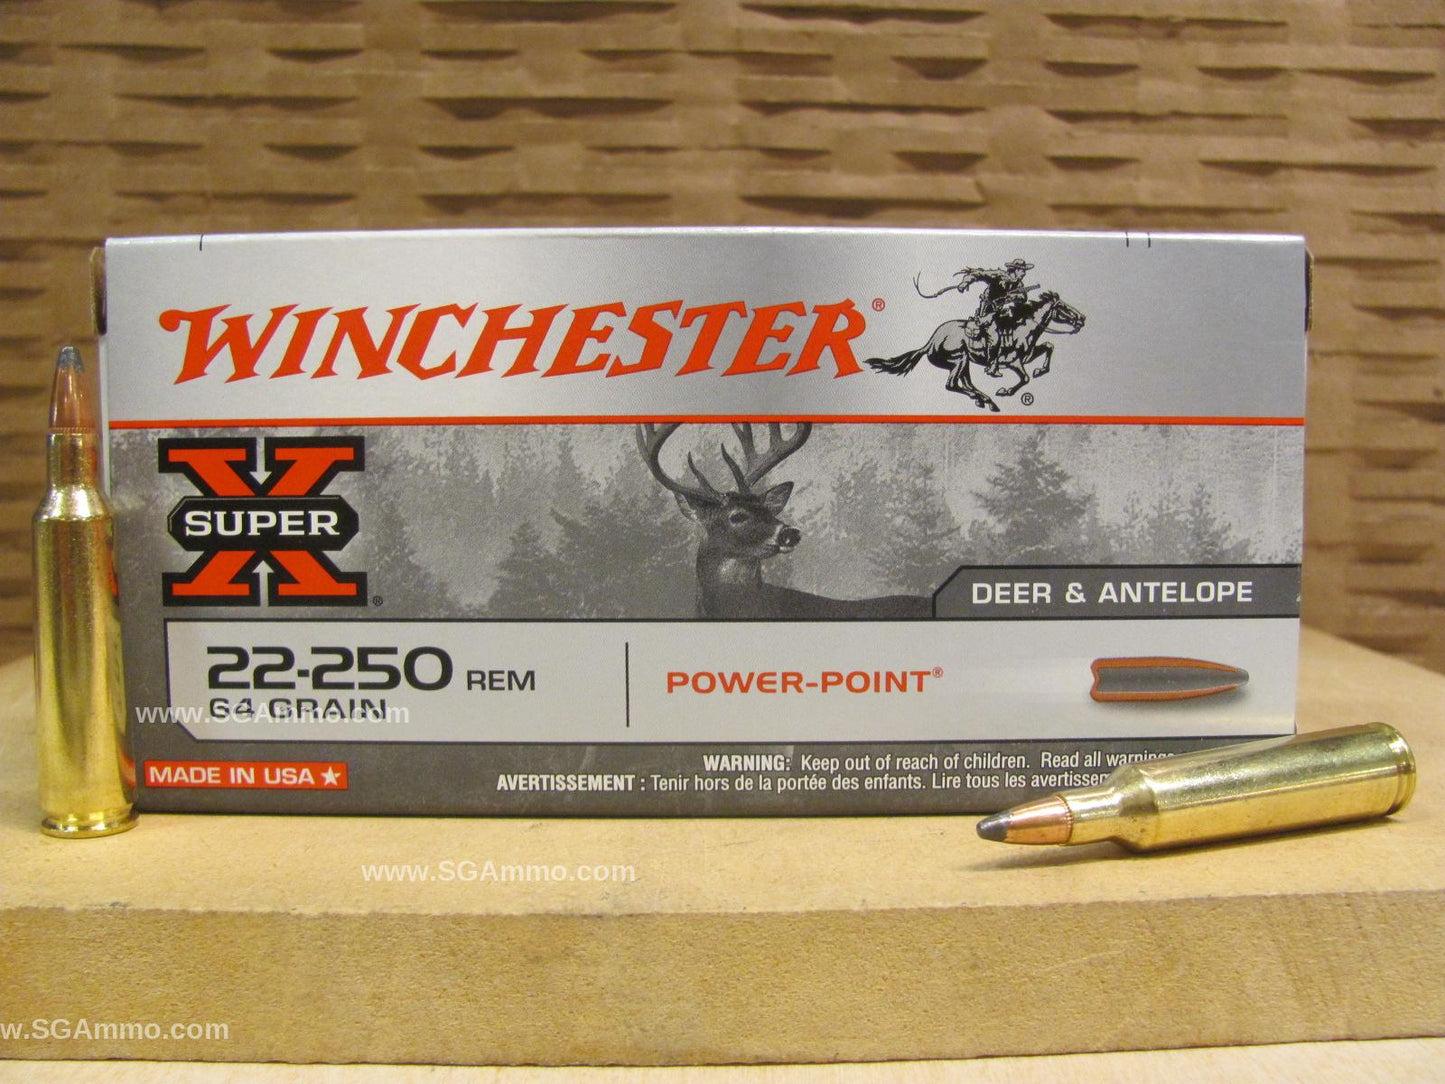 22-250 Rem 64 Grain Power Point Winchester Super X - 20